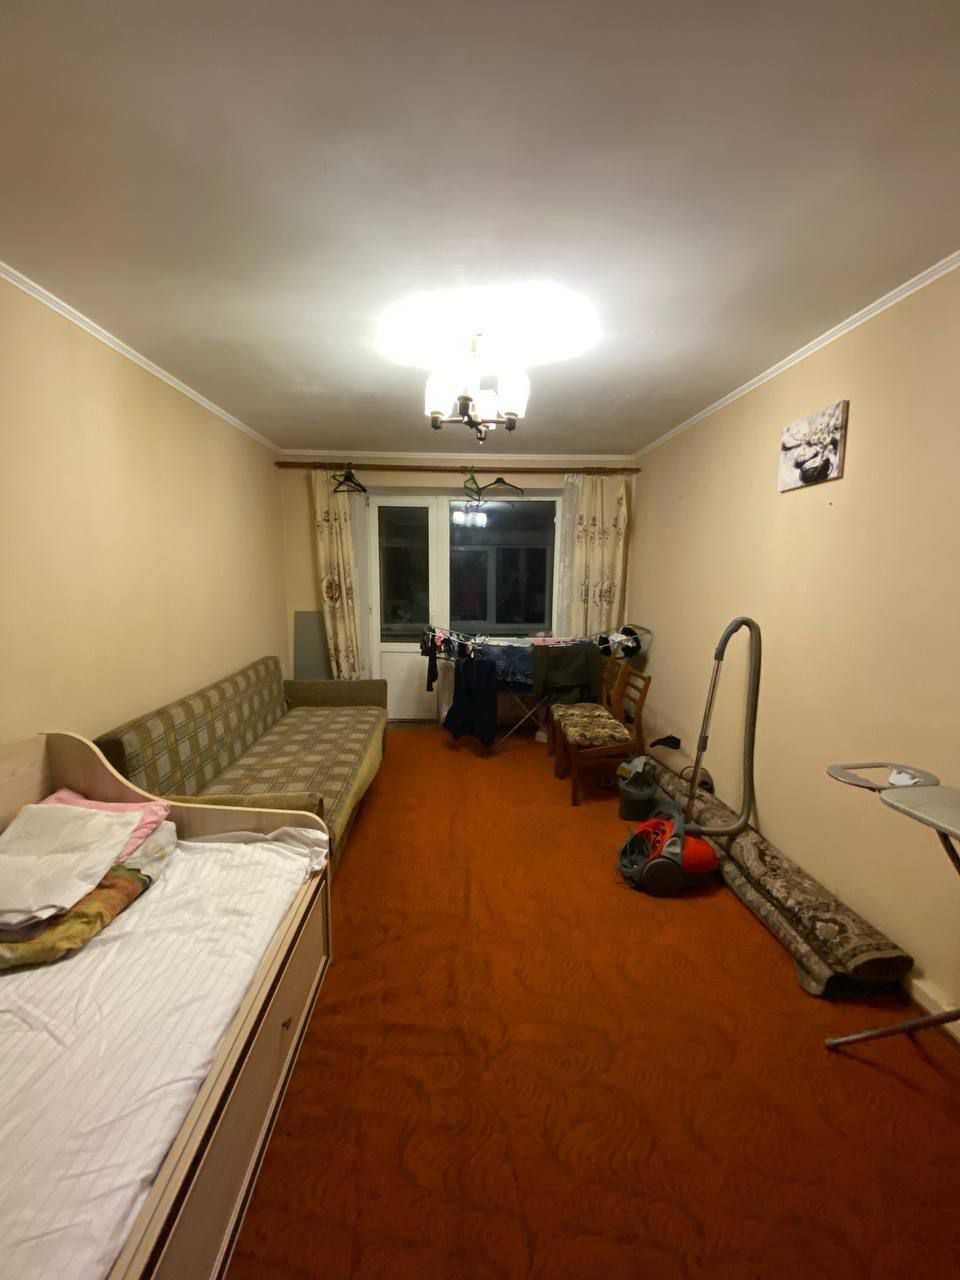 Продам 2х комнатную квартиру в Артемовке